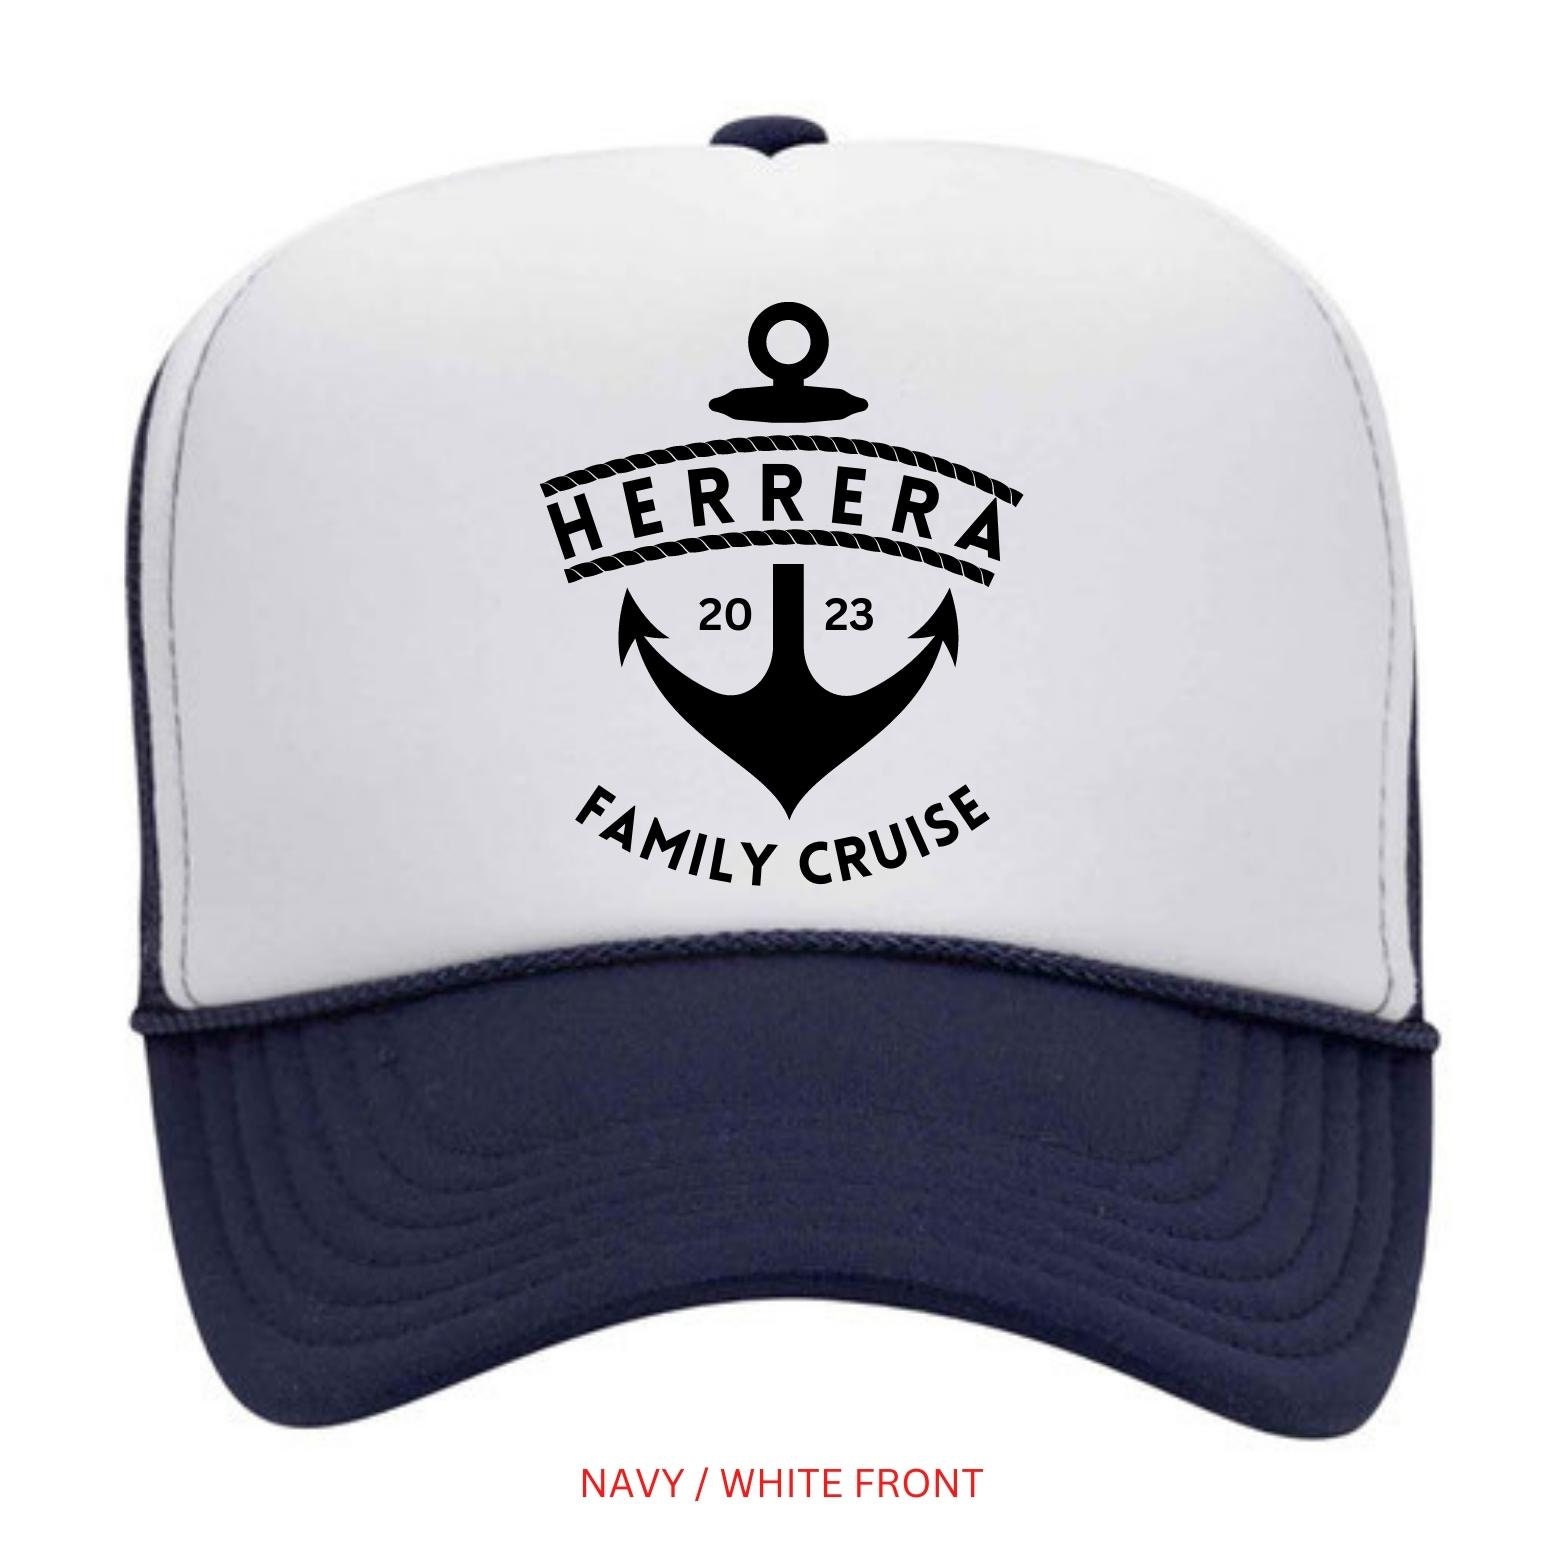 Family Cruise Hats, Matching Family Cruise Trucker Hats, Custom Family Cruise Trucker Hats, Family Cruisin' Hats, Ship Anchor Vacation Caps